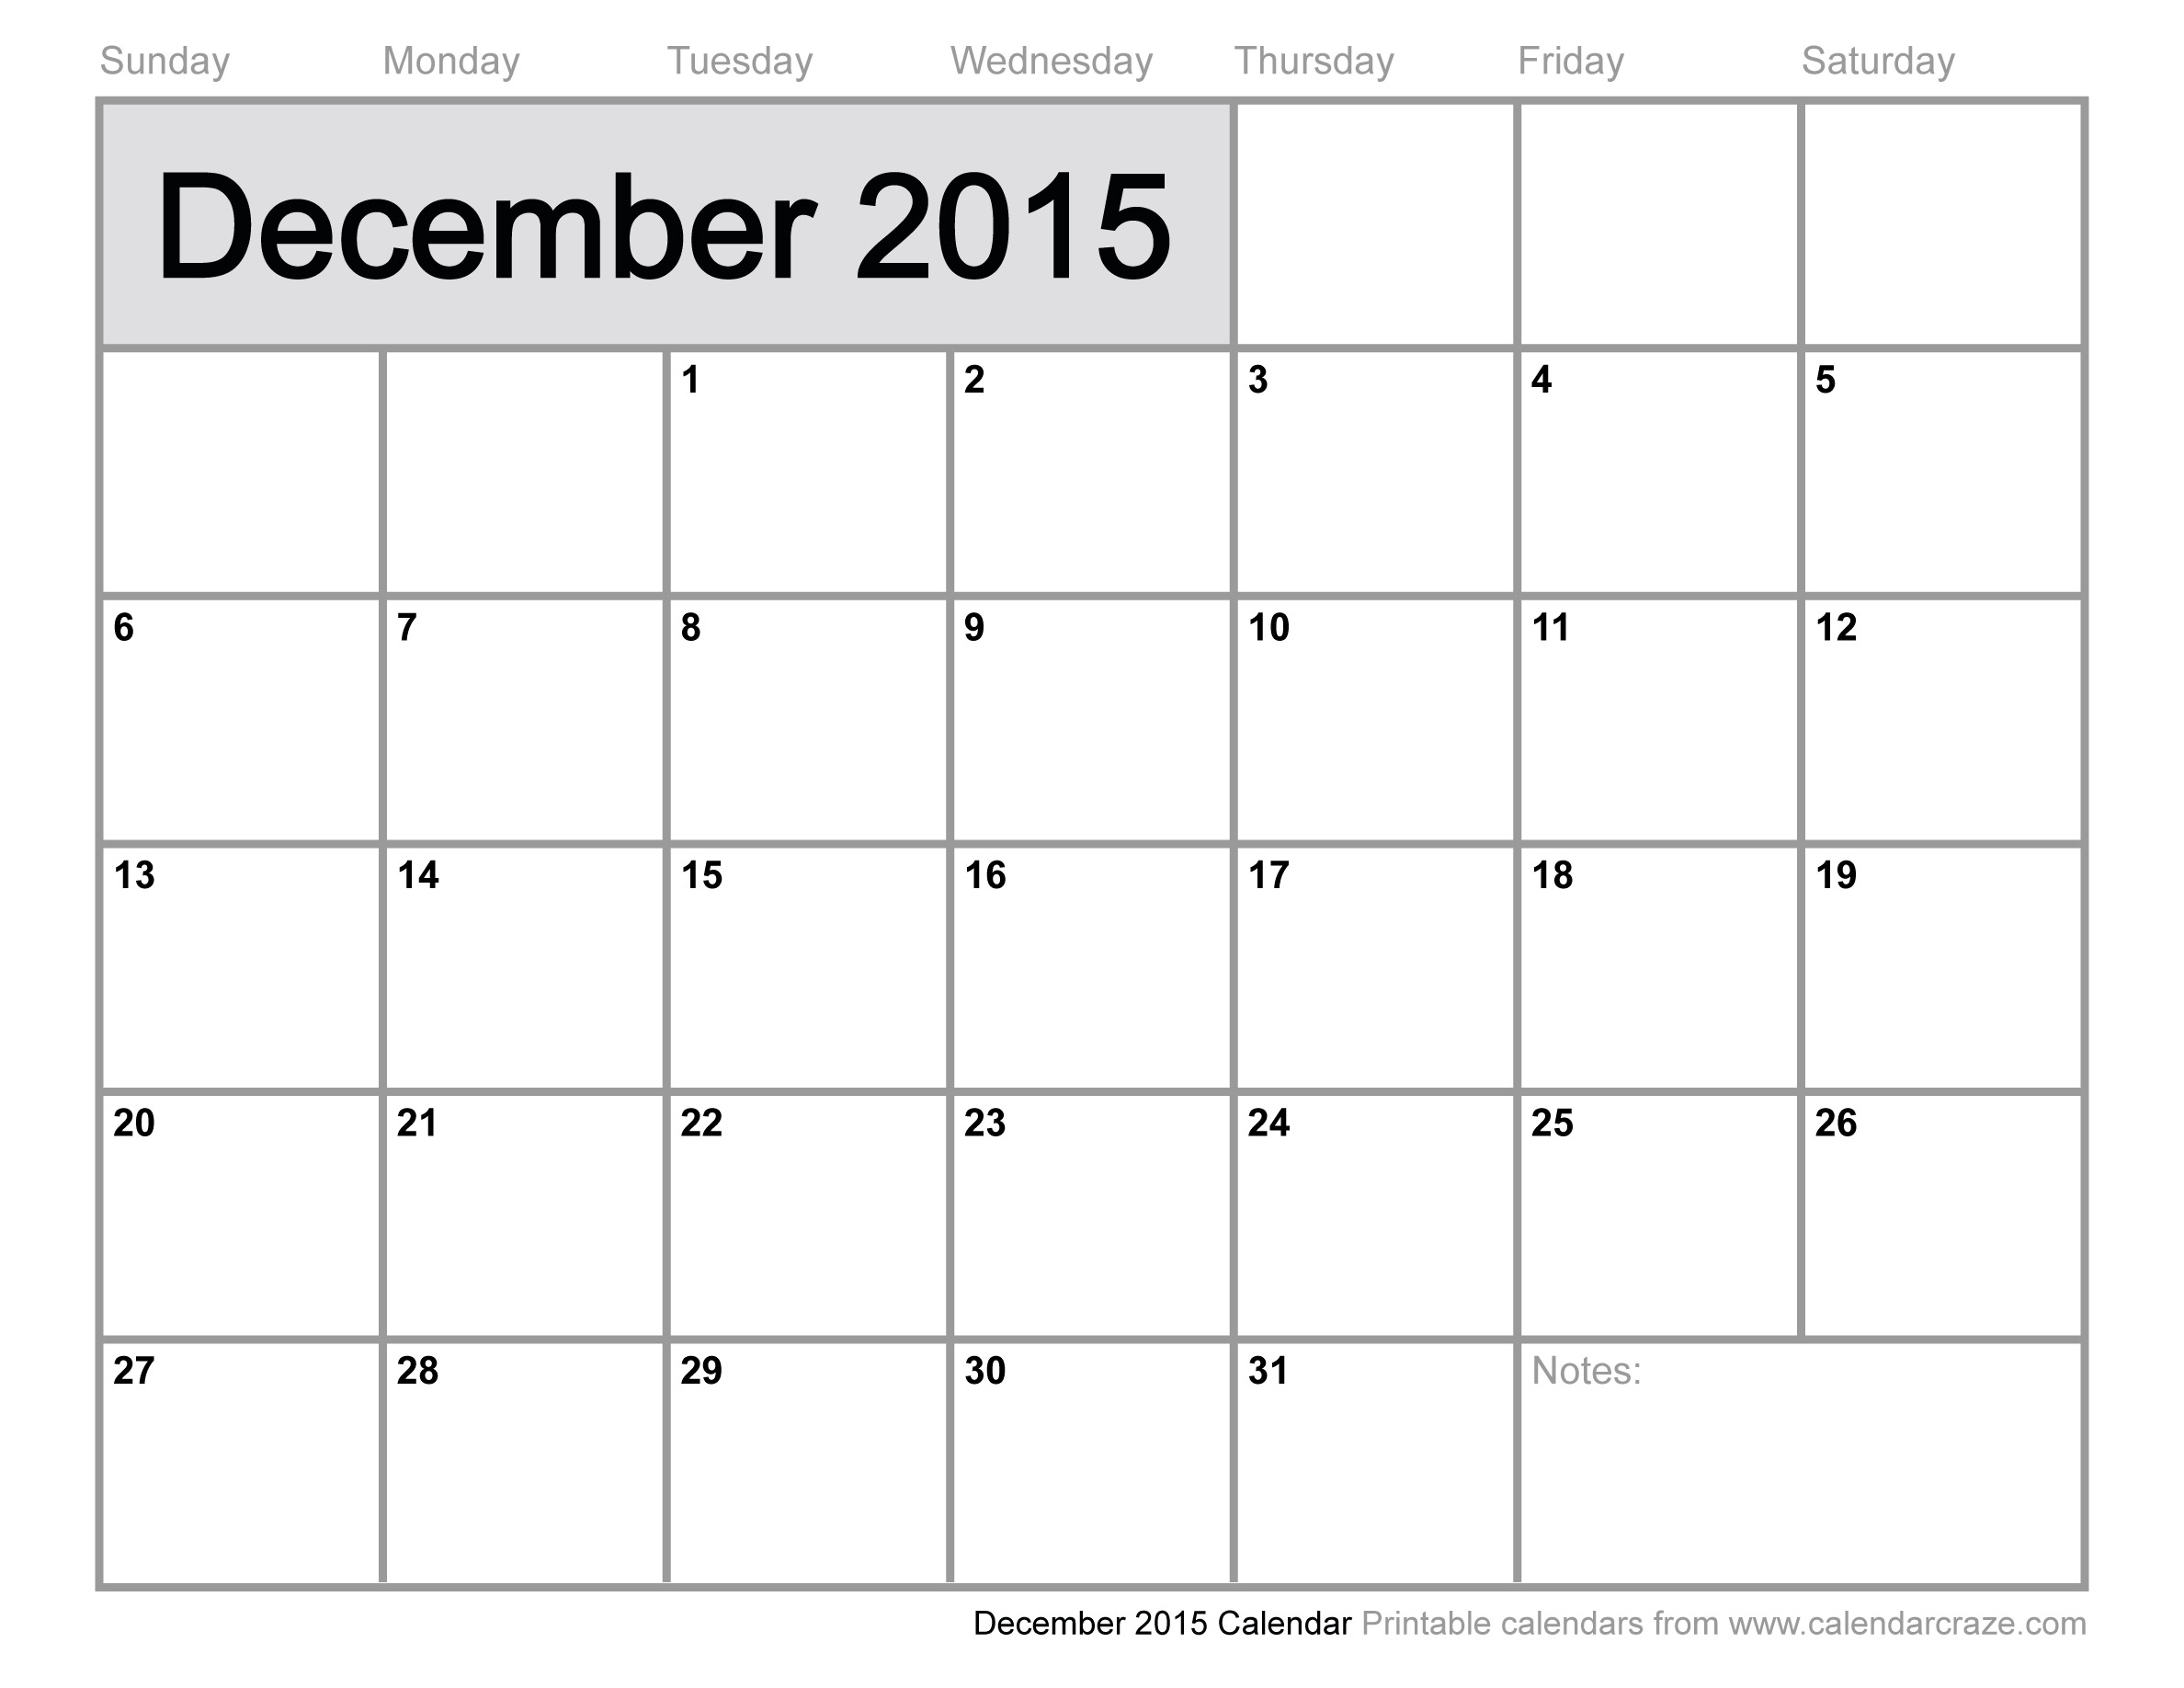 december-2015-calendar-printable-4.jpg